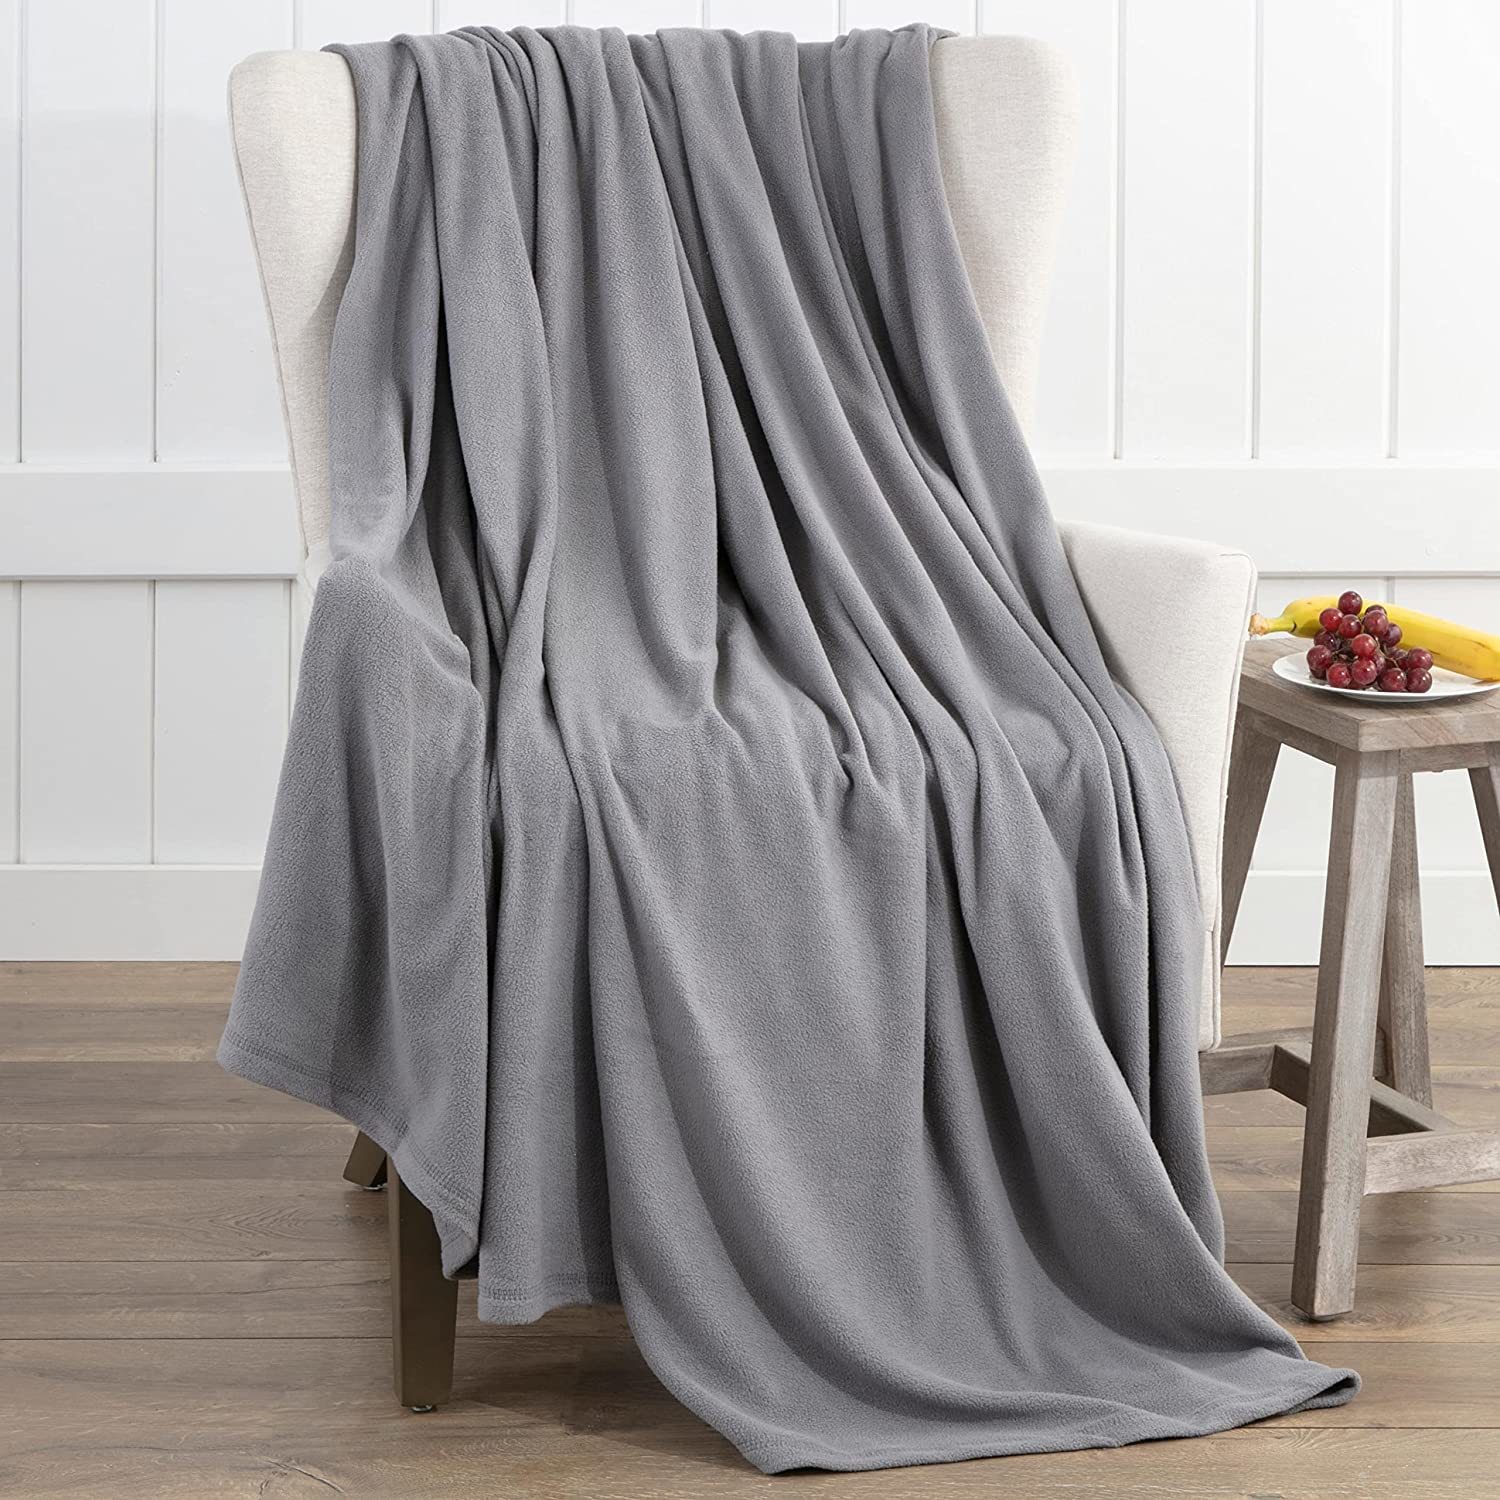 Martex 1B06871 Super Soft Fleece Plush Lightweight Blanket Low Lint Luxury, Grey - $35.99